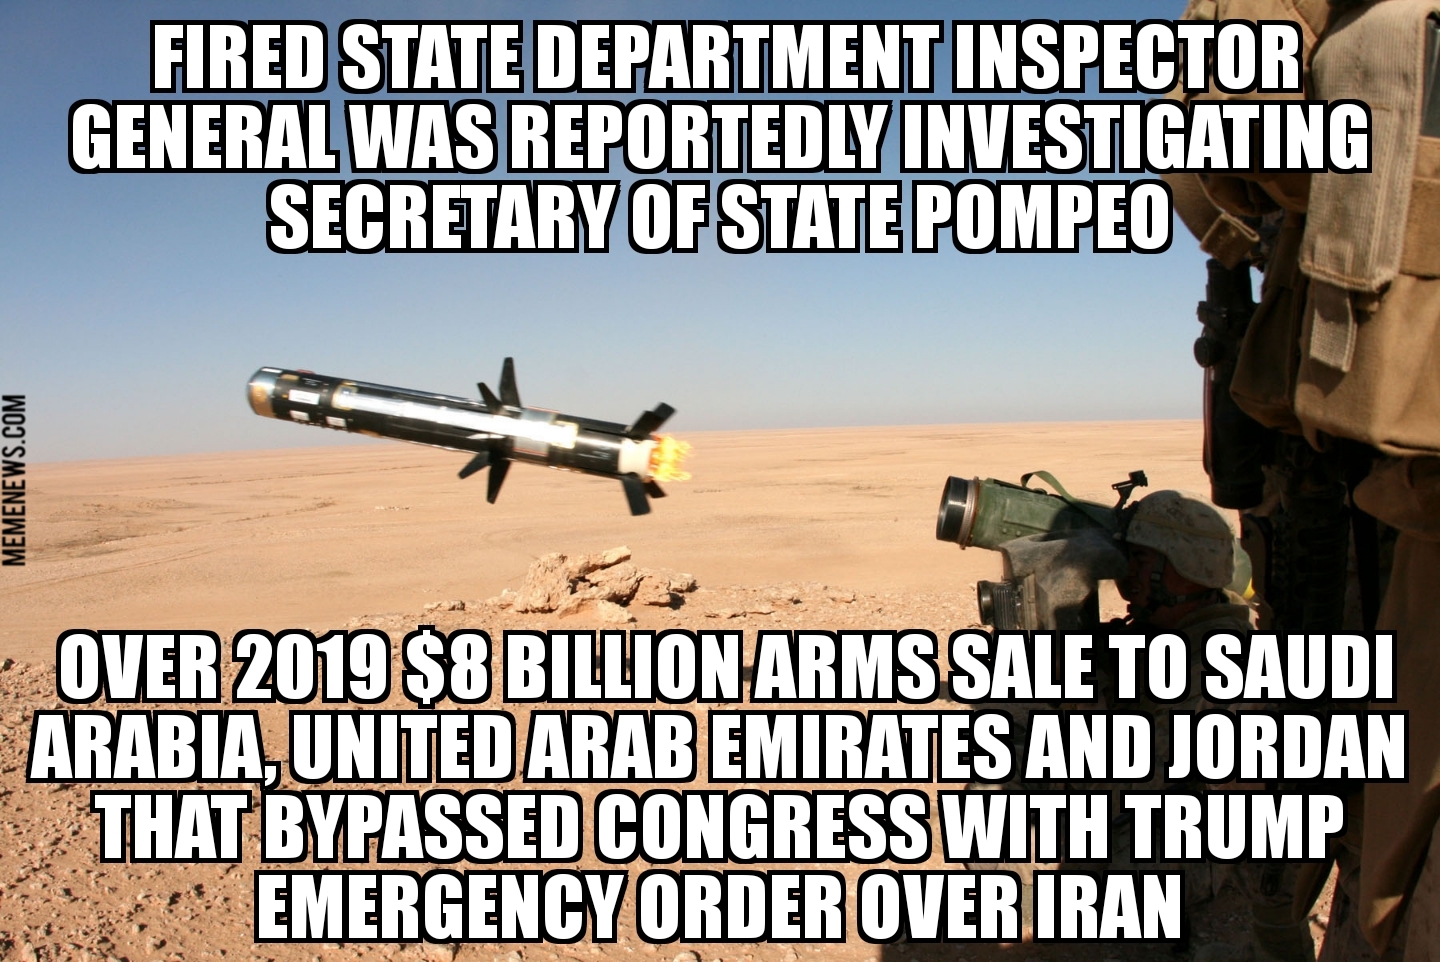 DOJ inspector general was investigating Pompeo over 2019 arms deal